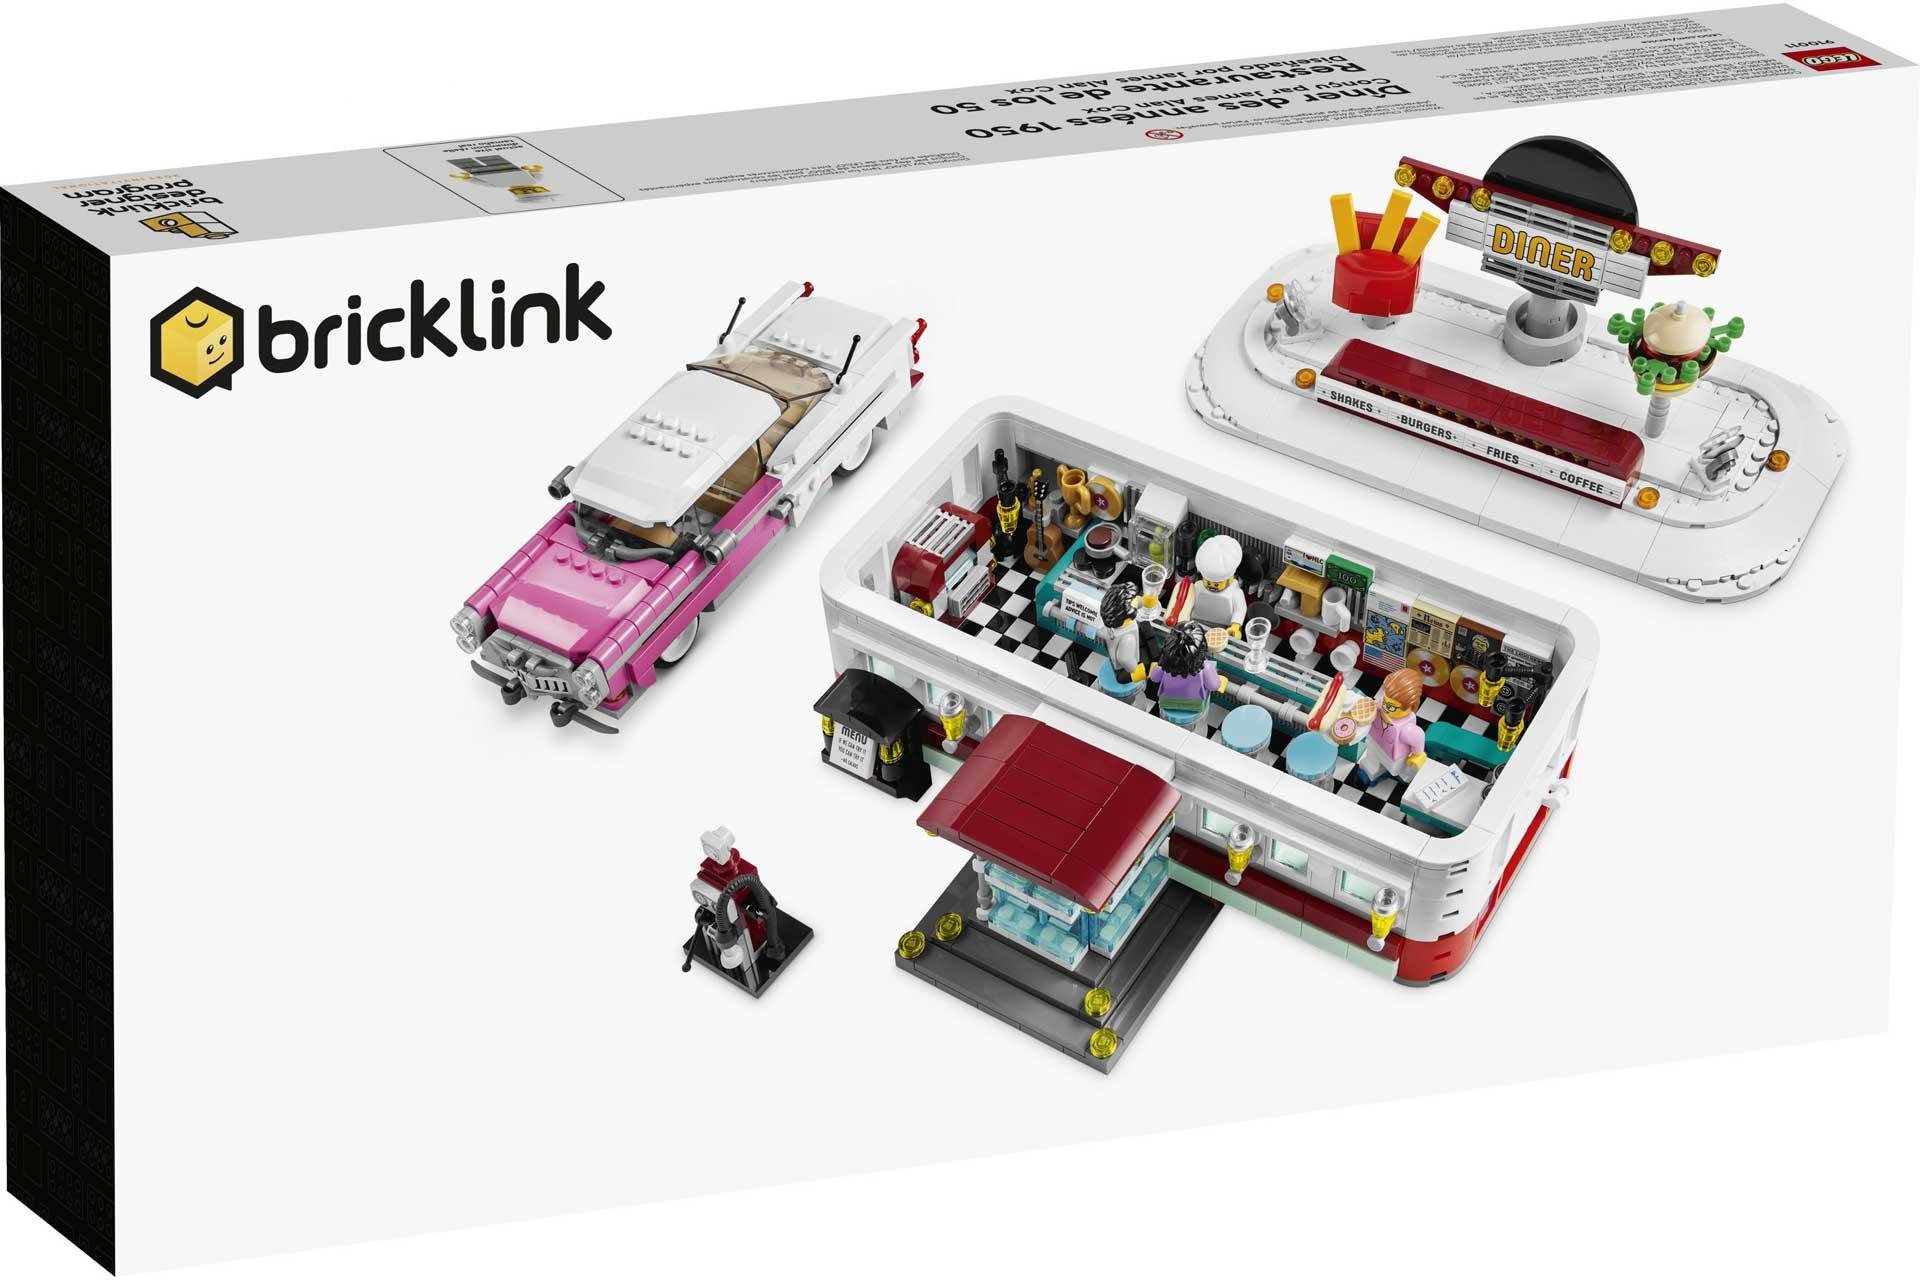 LEGO 1950’s Diner 910011 Bricklink LEGO BRICKLINK @ 2TTOYS BRICKLINK €. 219.99